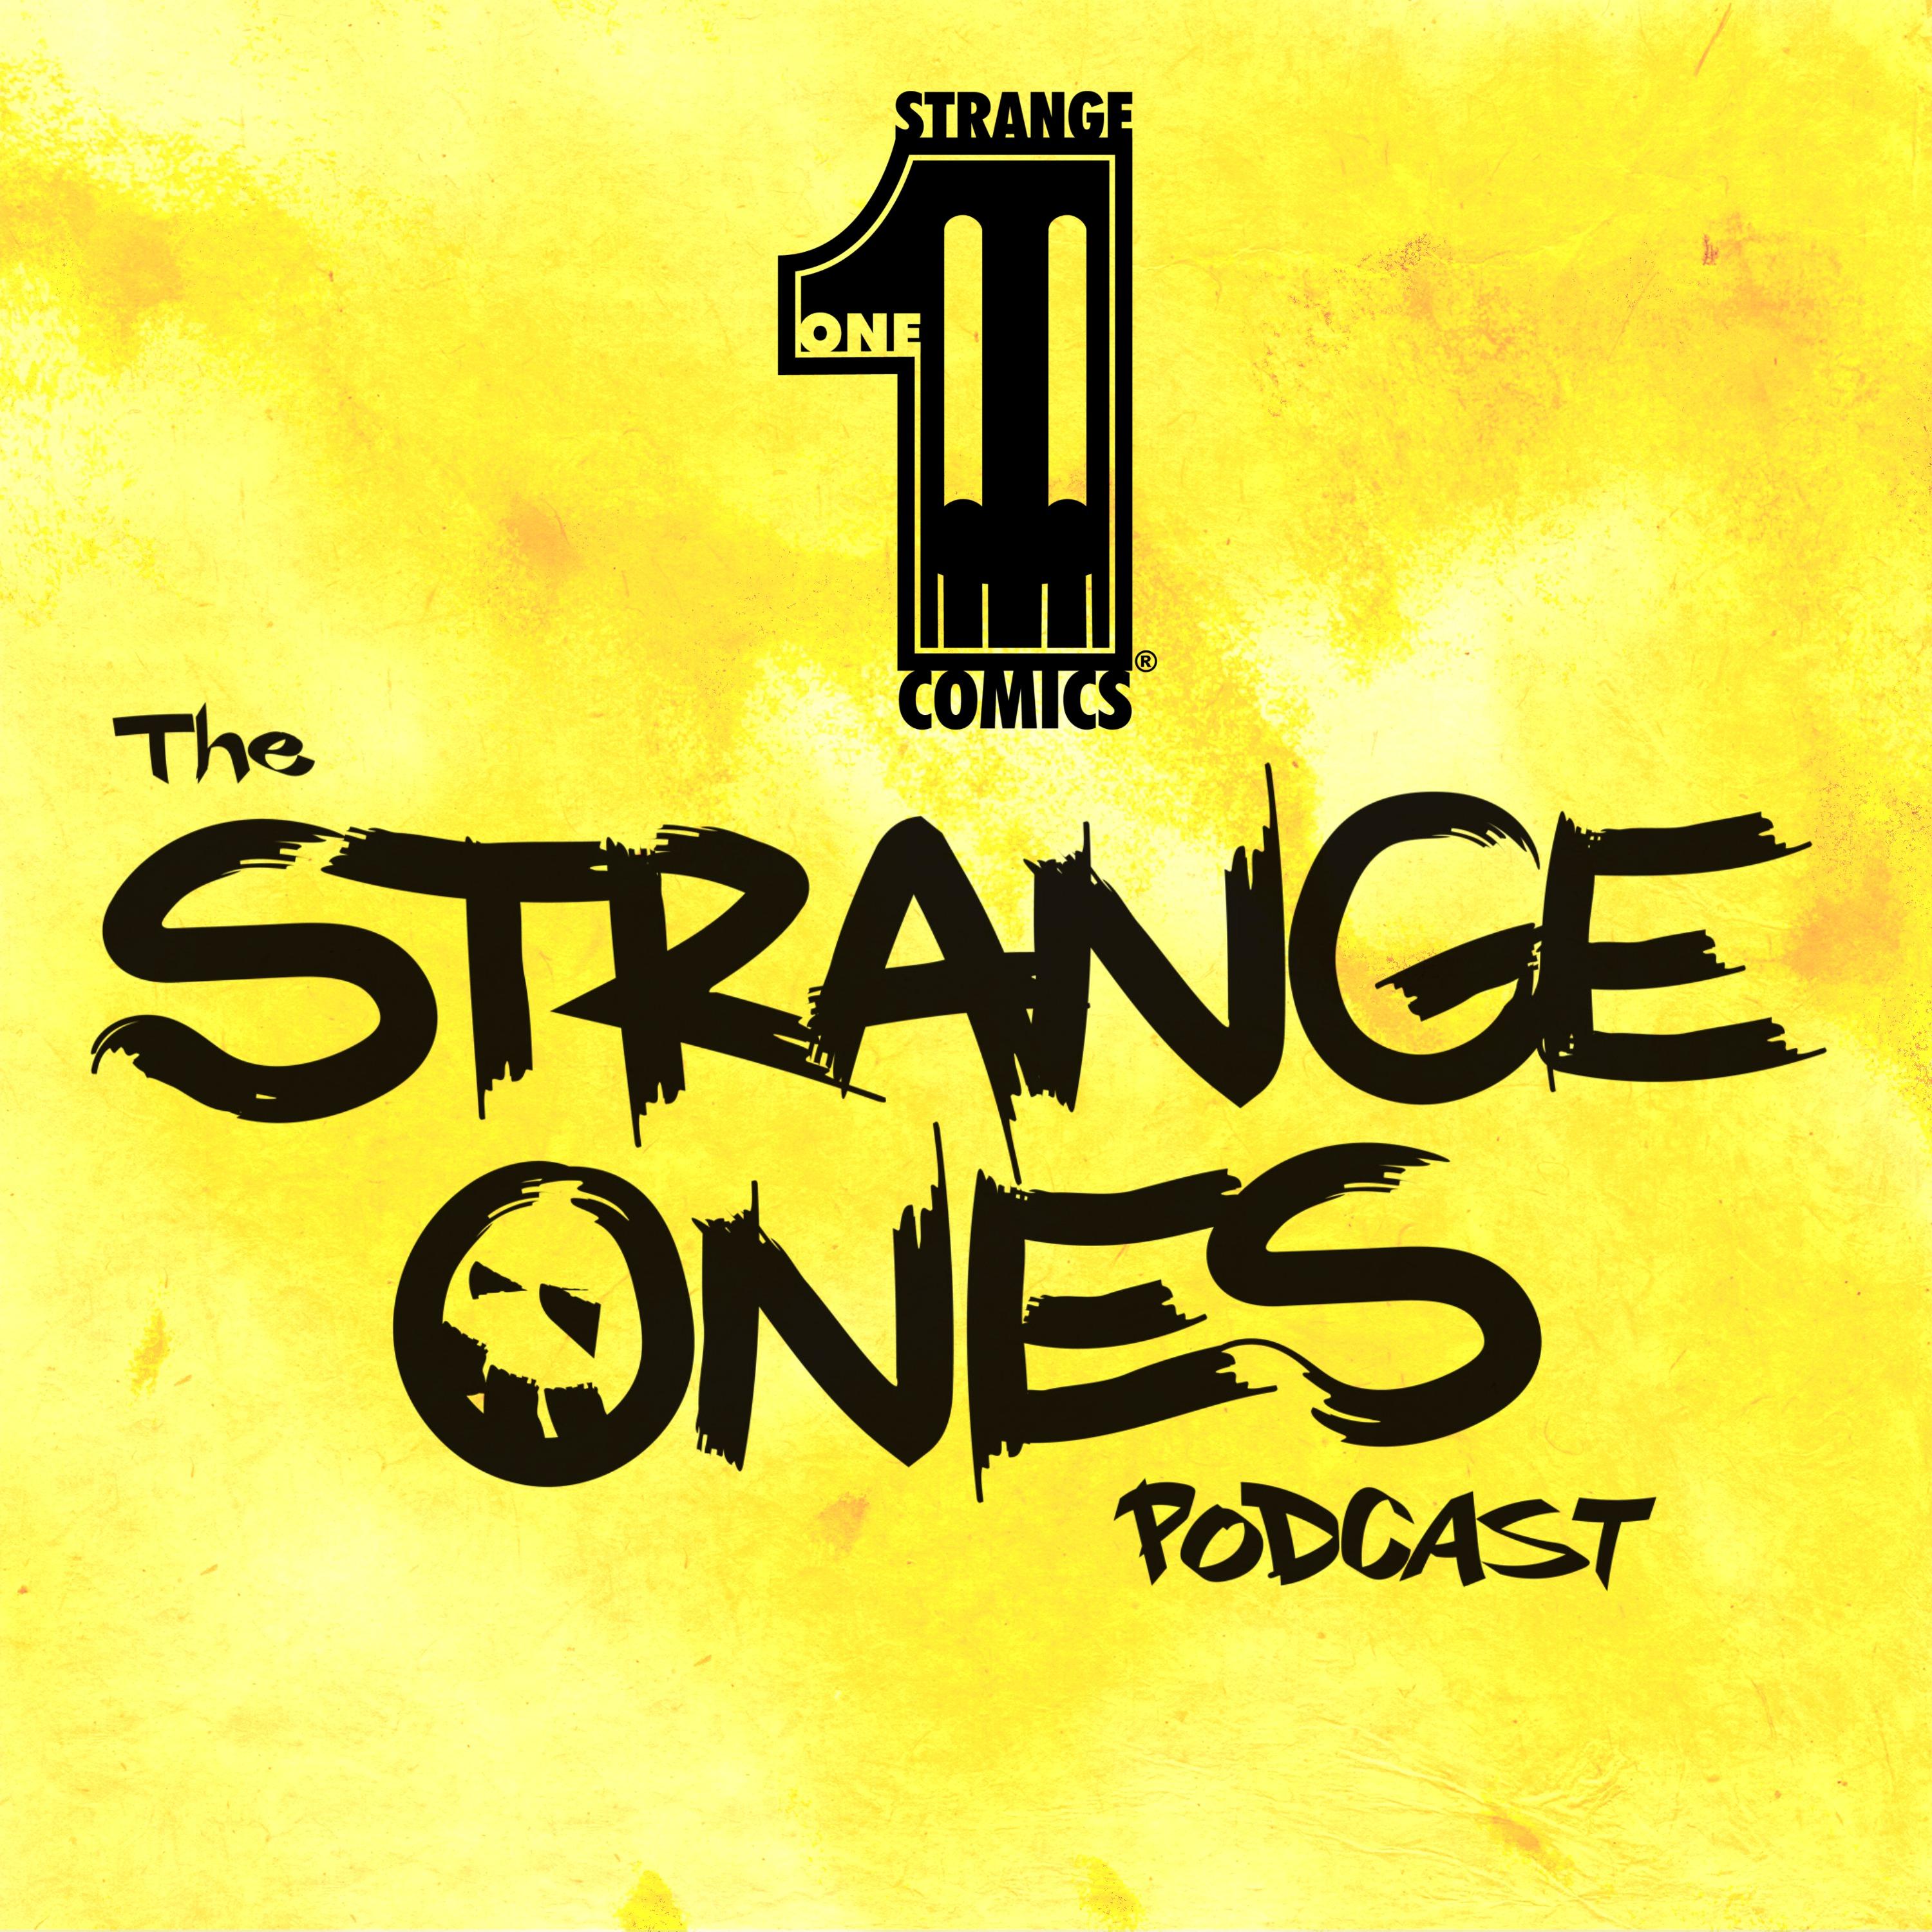 The Strange Ones Podcast